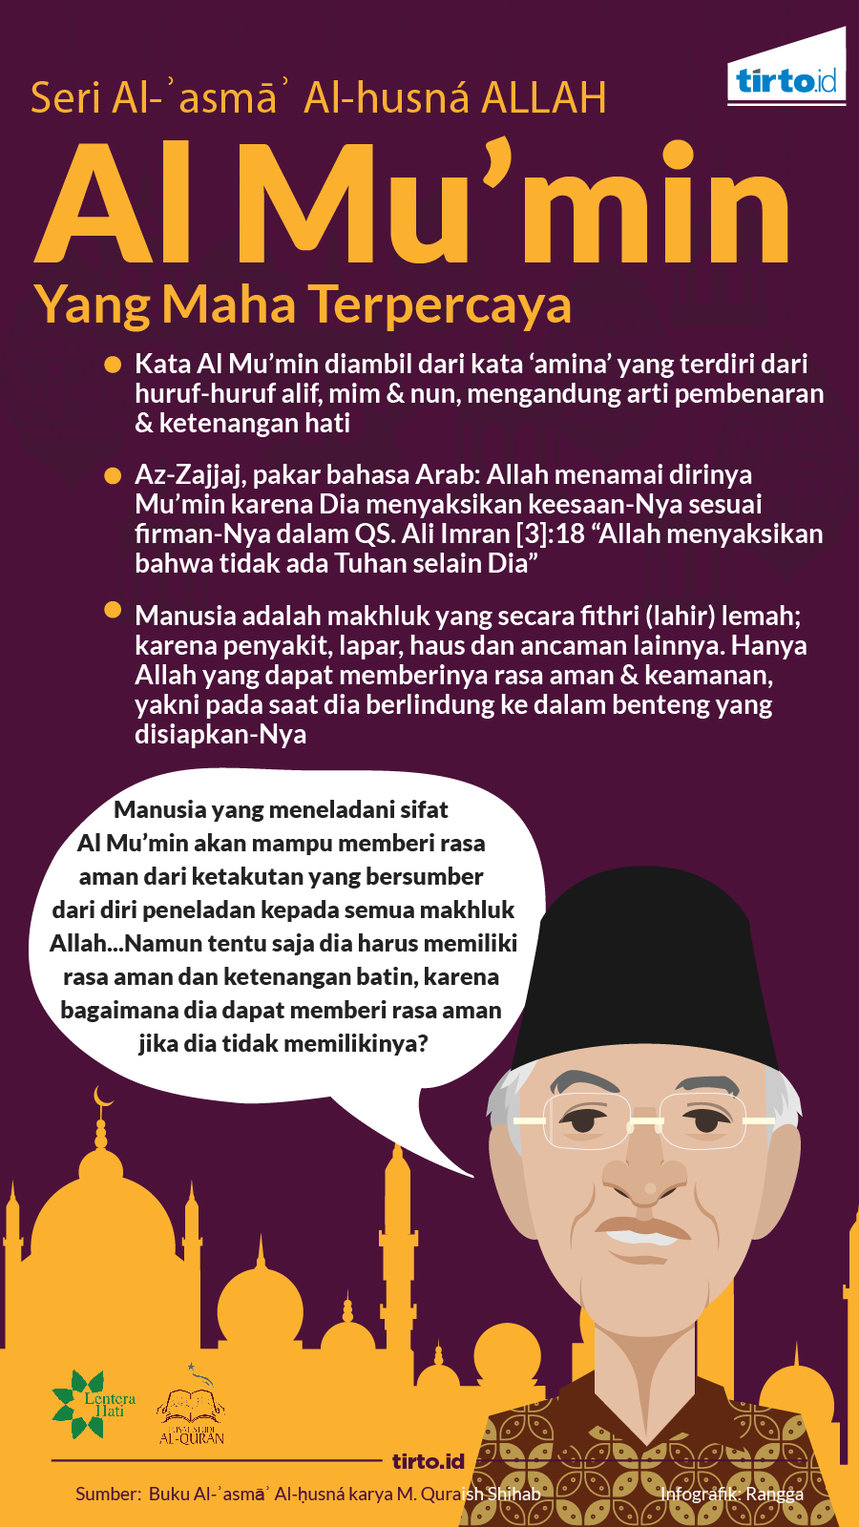 Infografik Al mumin al-asma al-husna